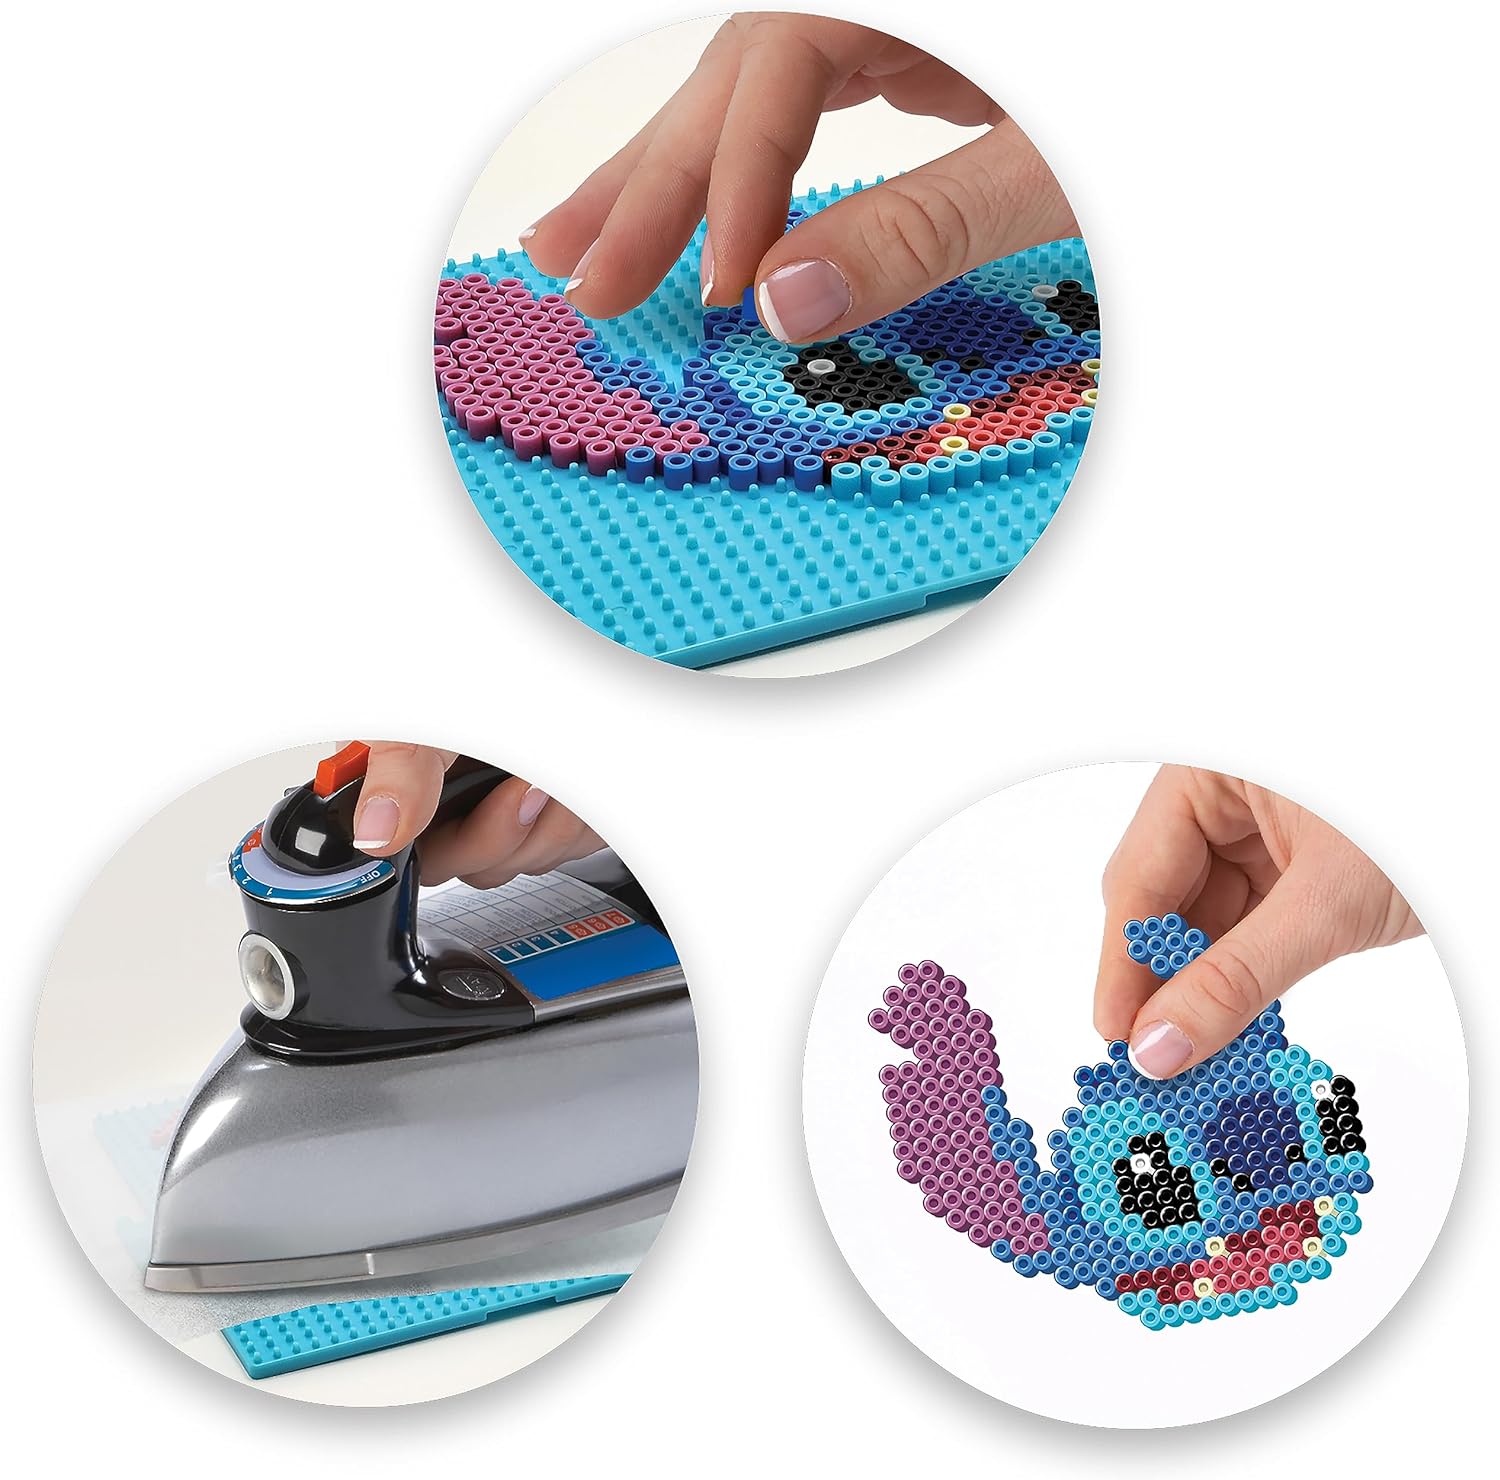 Perler Disney's Lilo and Stitch Fused Bead Craft Activity Kit